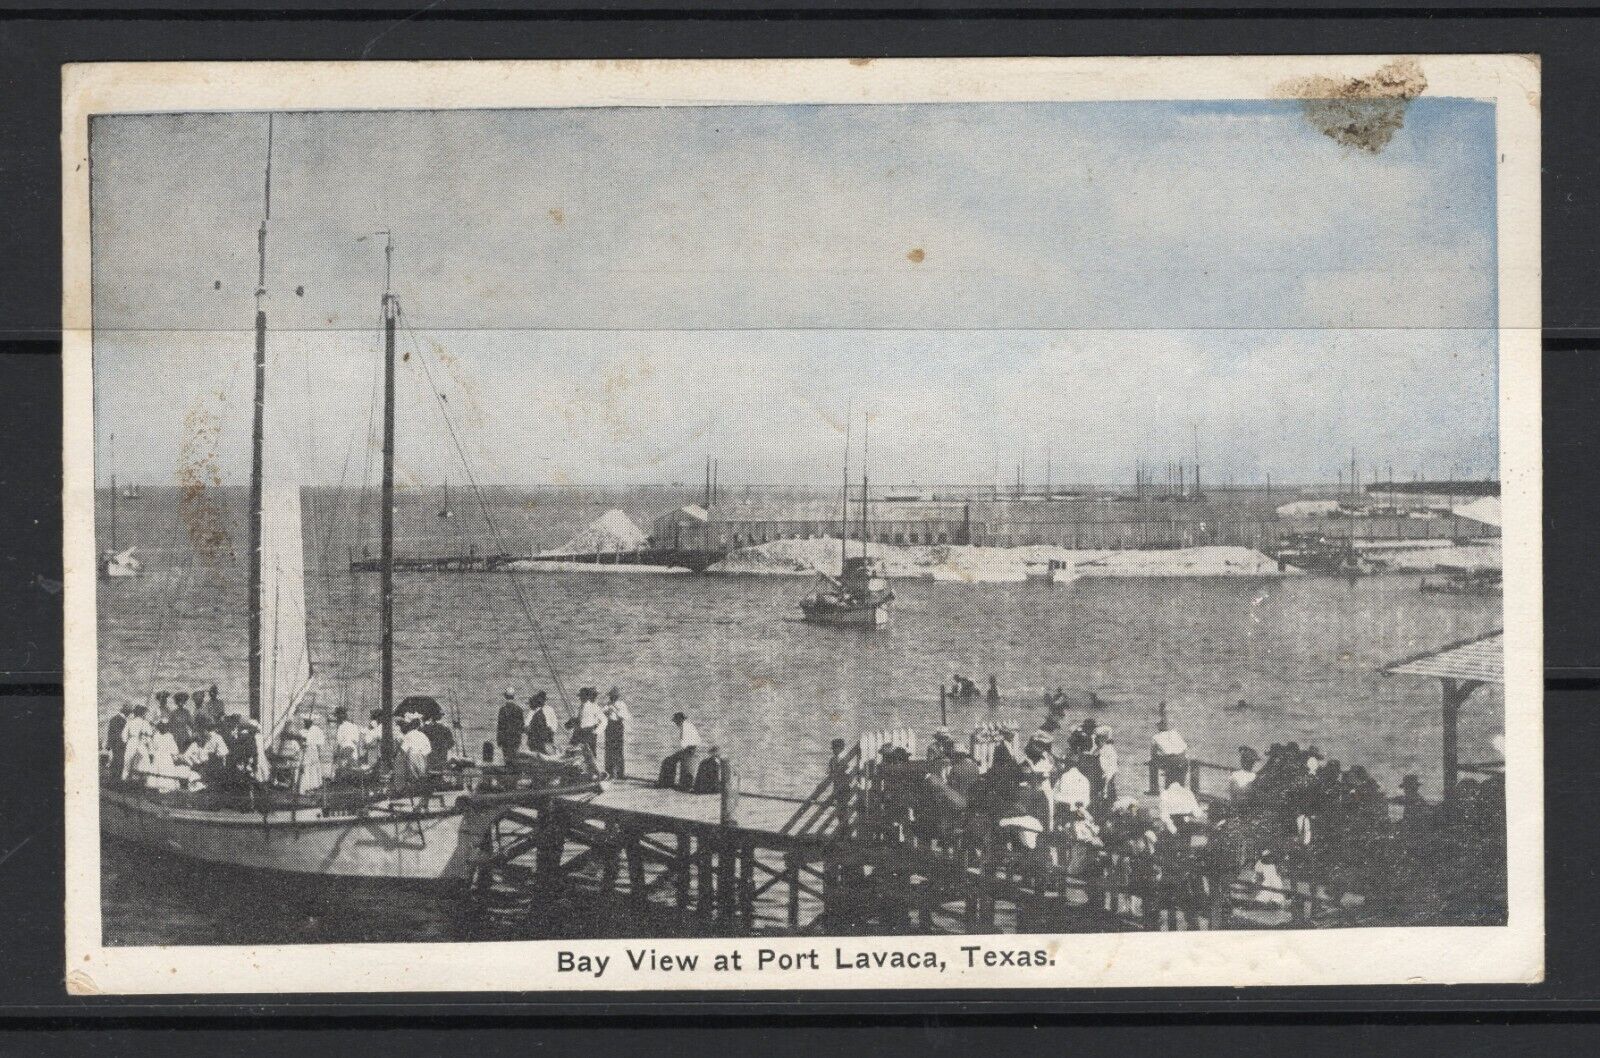 View of Bay at Port lavaca Texas postcard - 1925